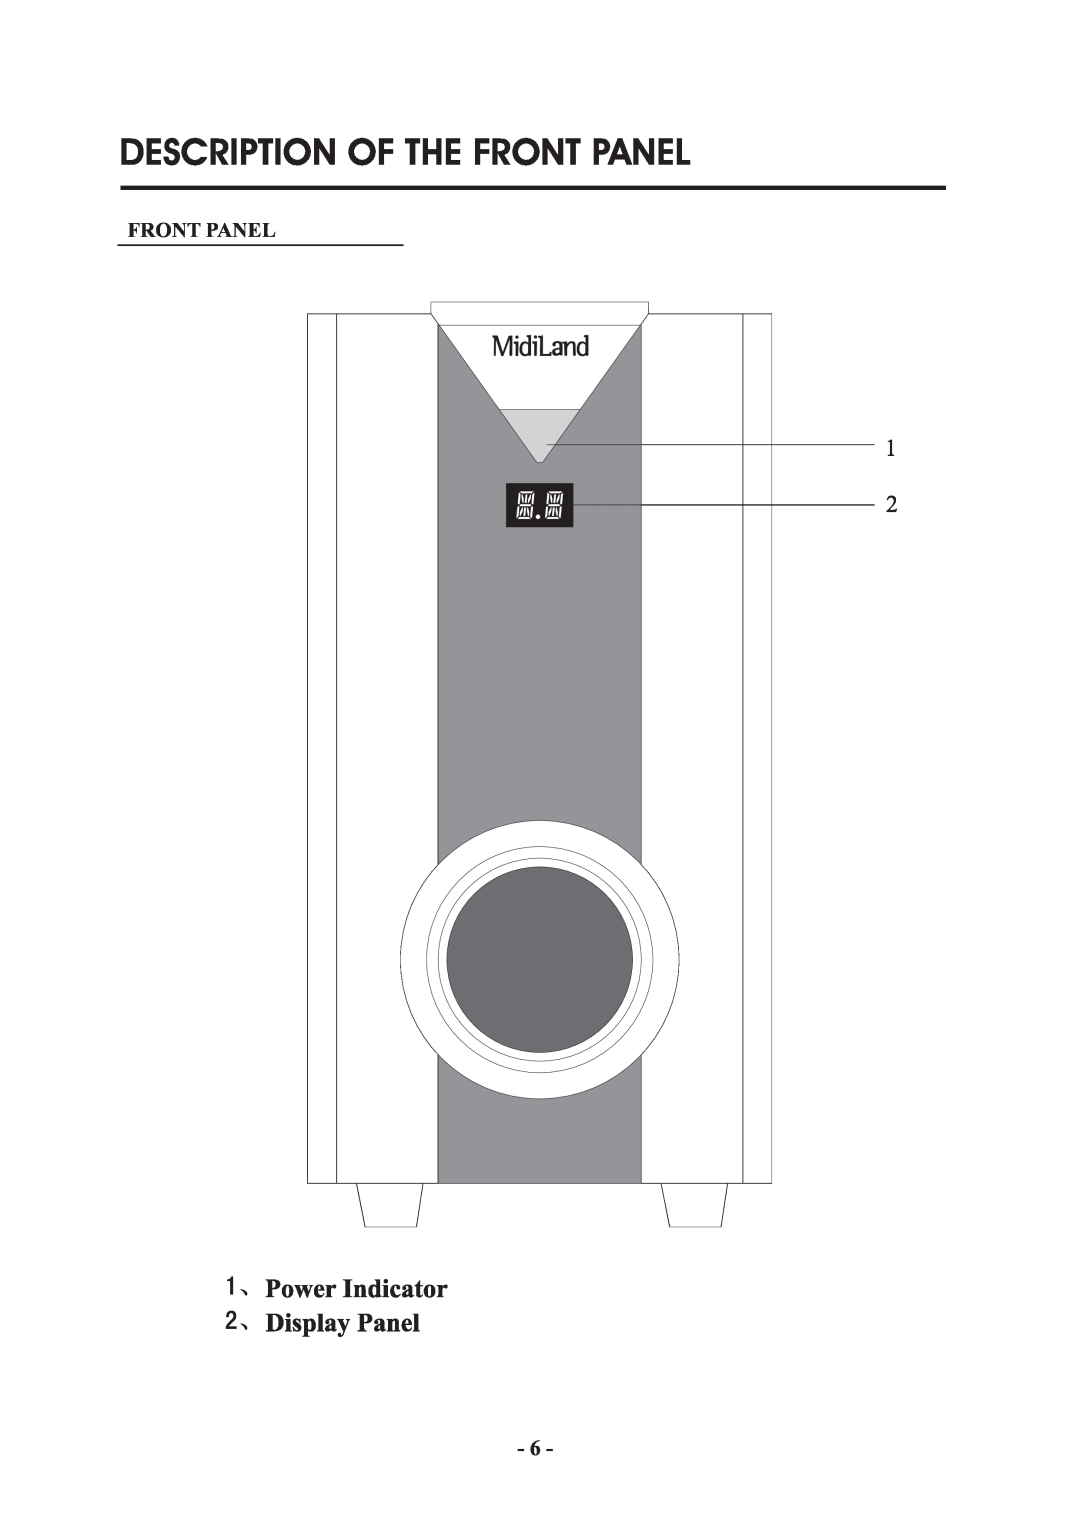 MidiLand 750 manual Description Of The Front Panel 